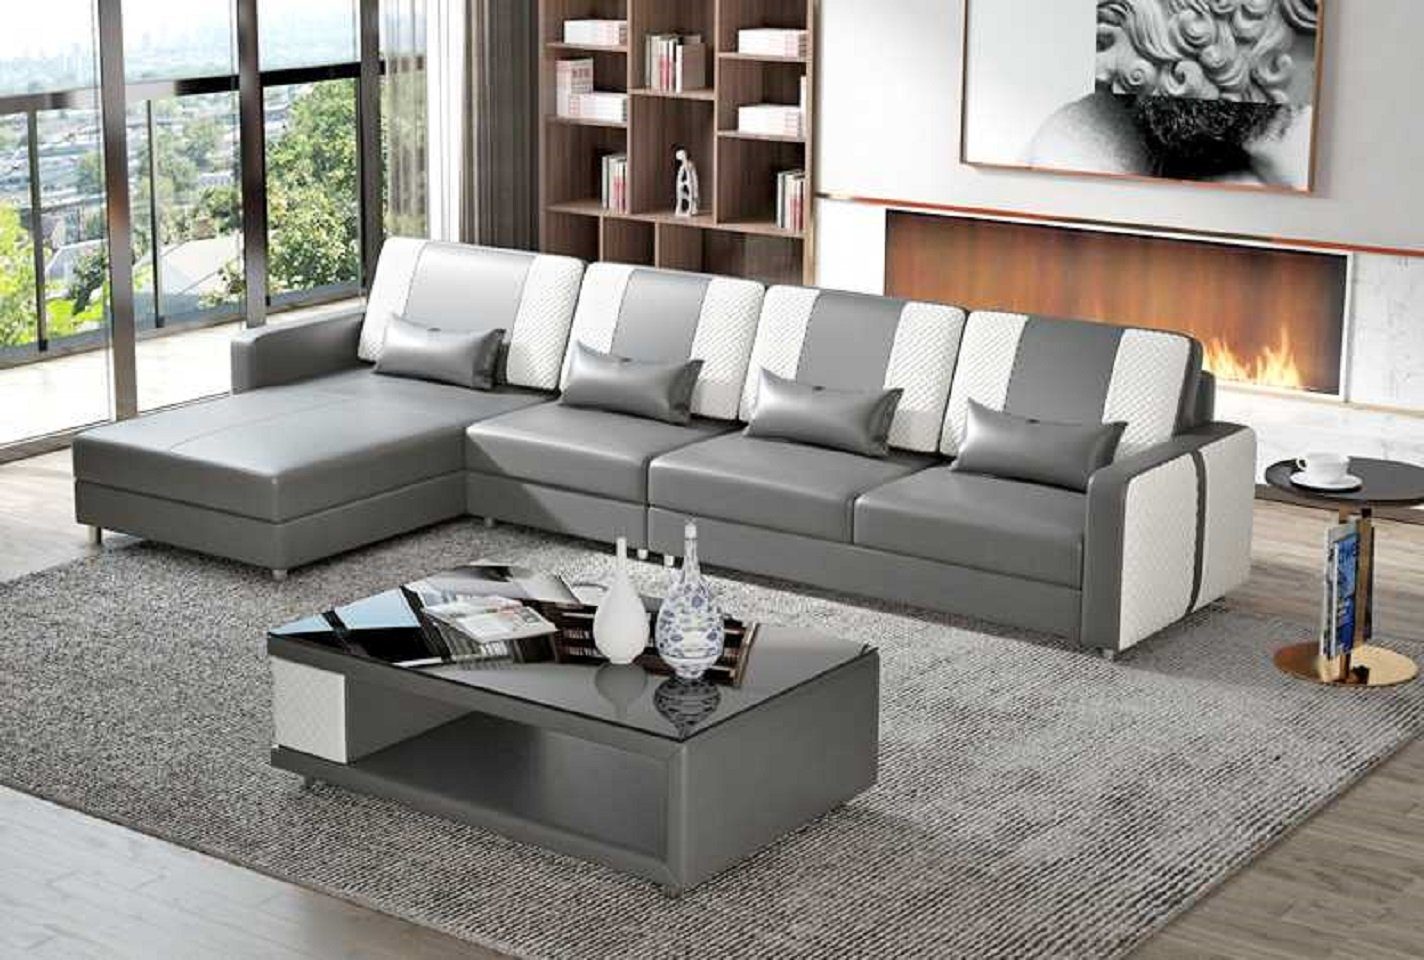 Liege 3 Ecksofa Teile, Ecksofa Made Luxus L Sofa Modern Europe Couch Form Grau JVmoebel Eckgarnitur Neu, in